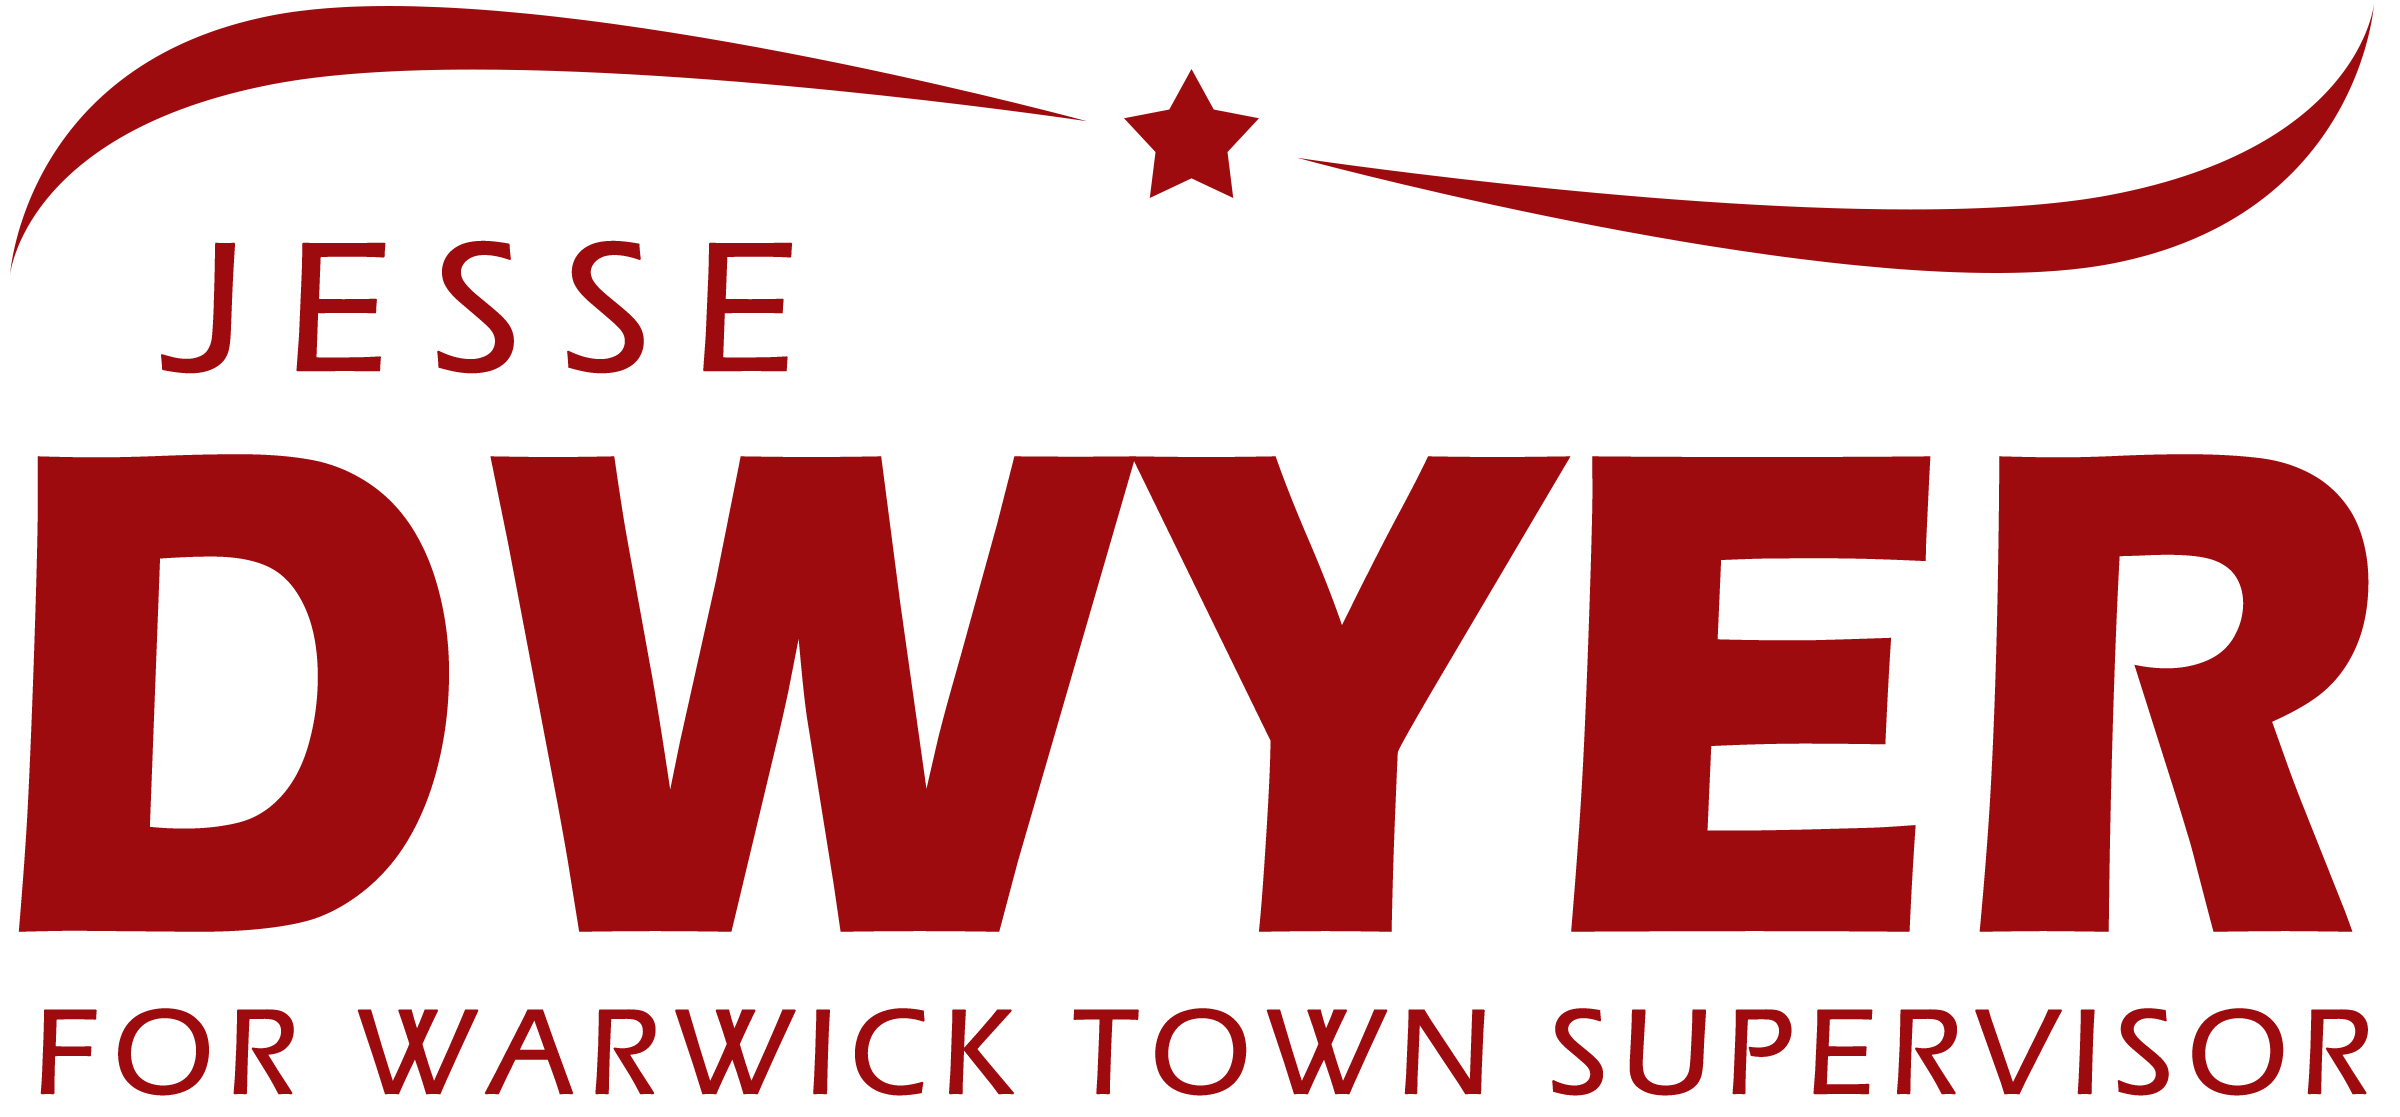 Jesse Dwyer for Warwick Town Supervisor